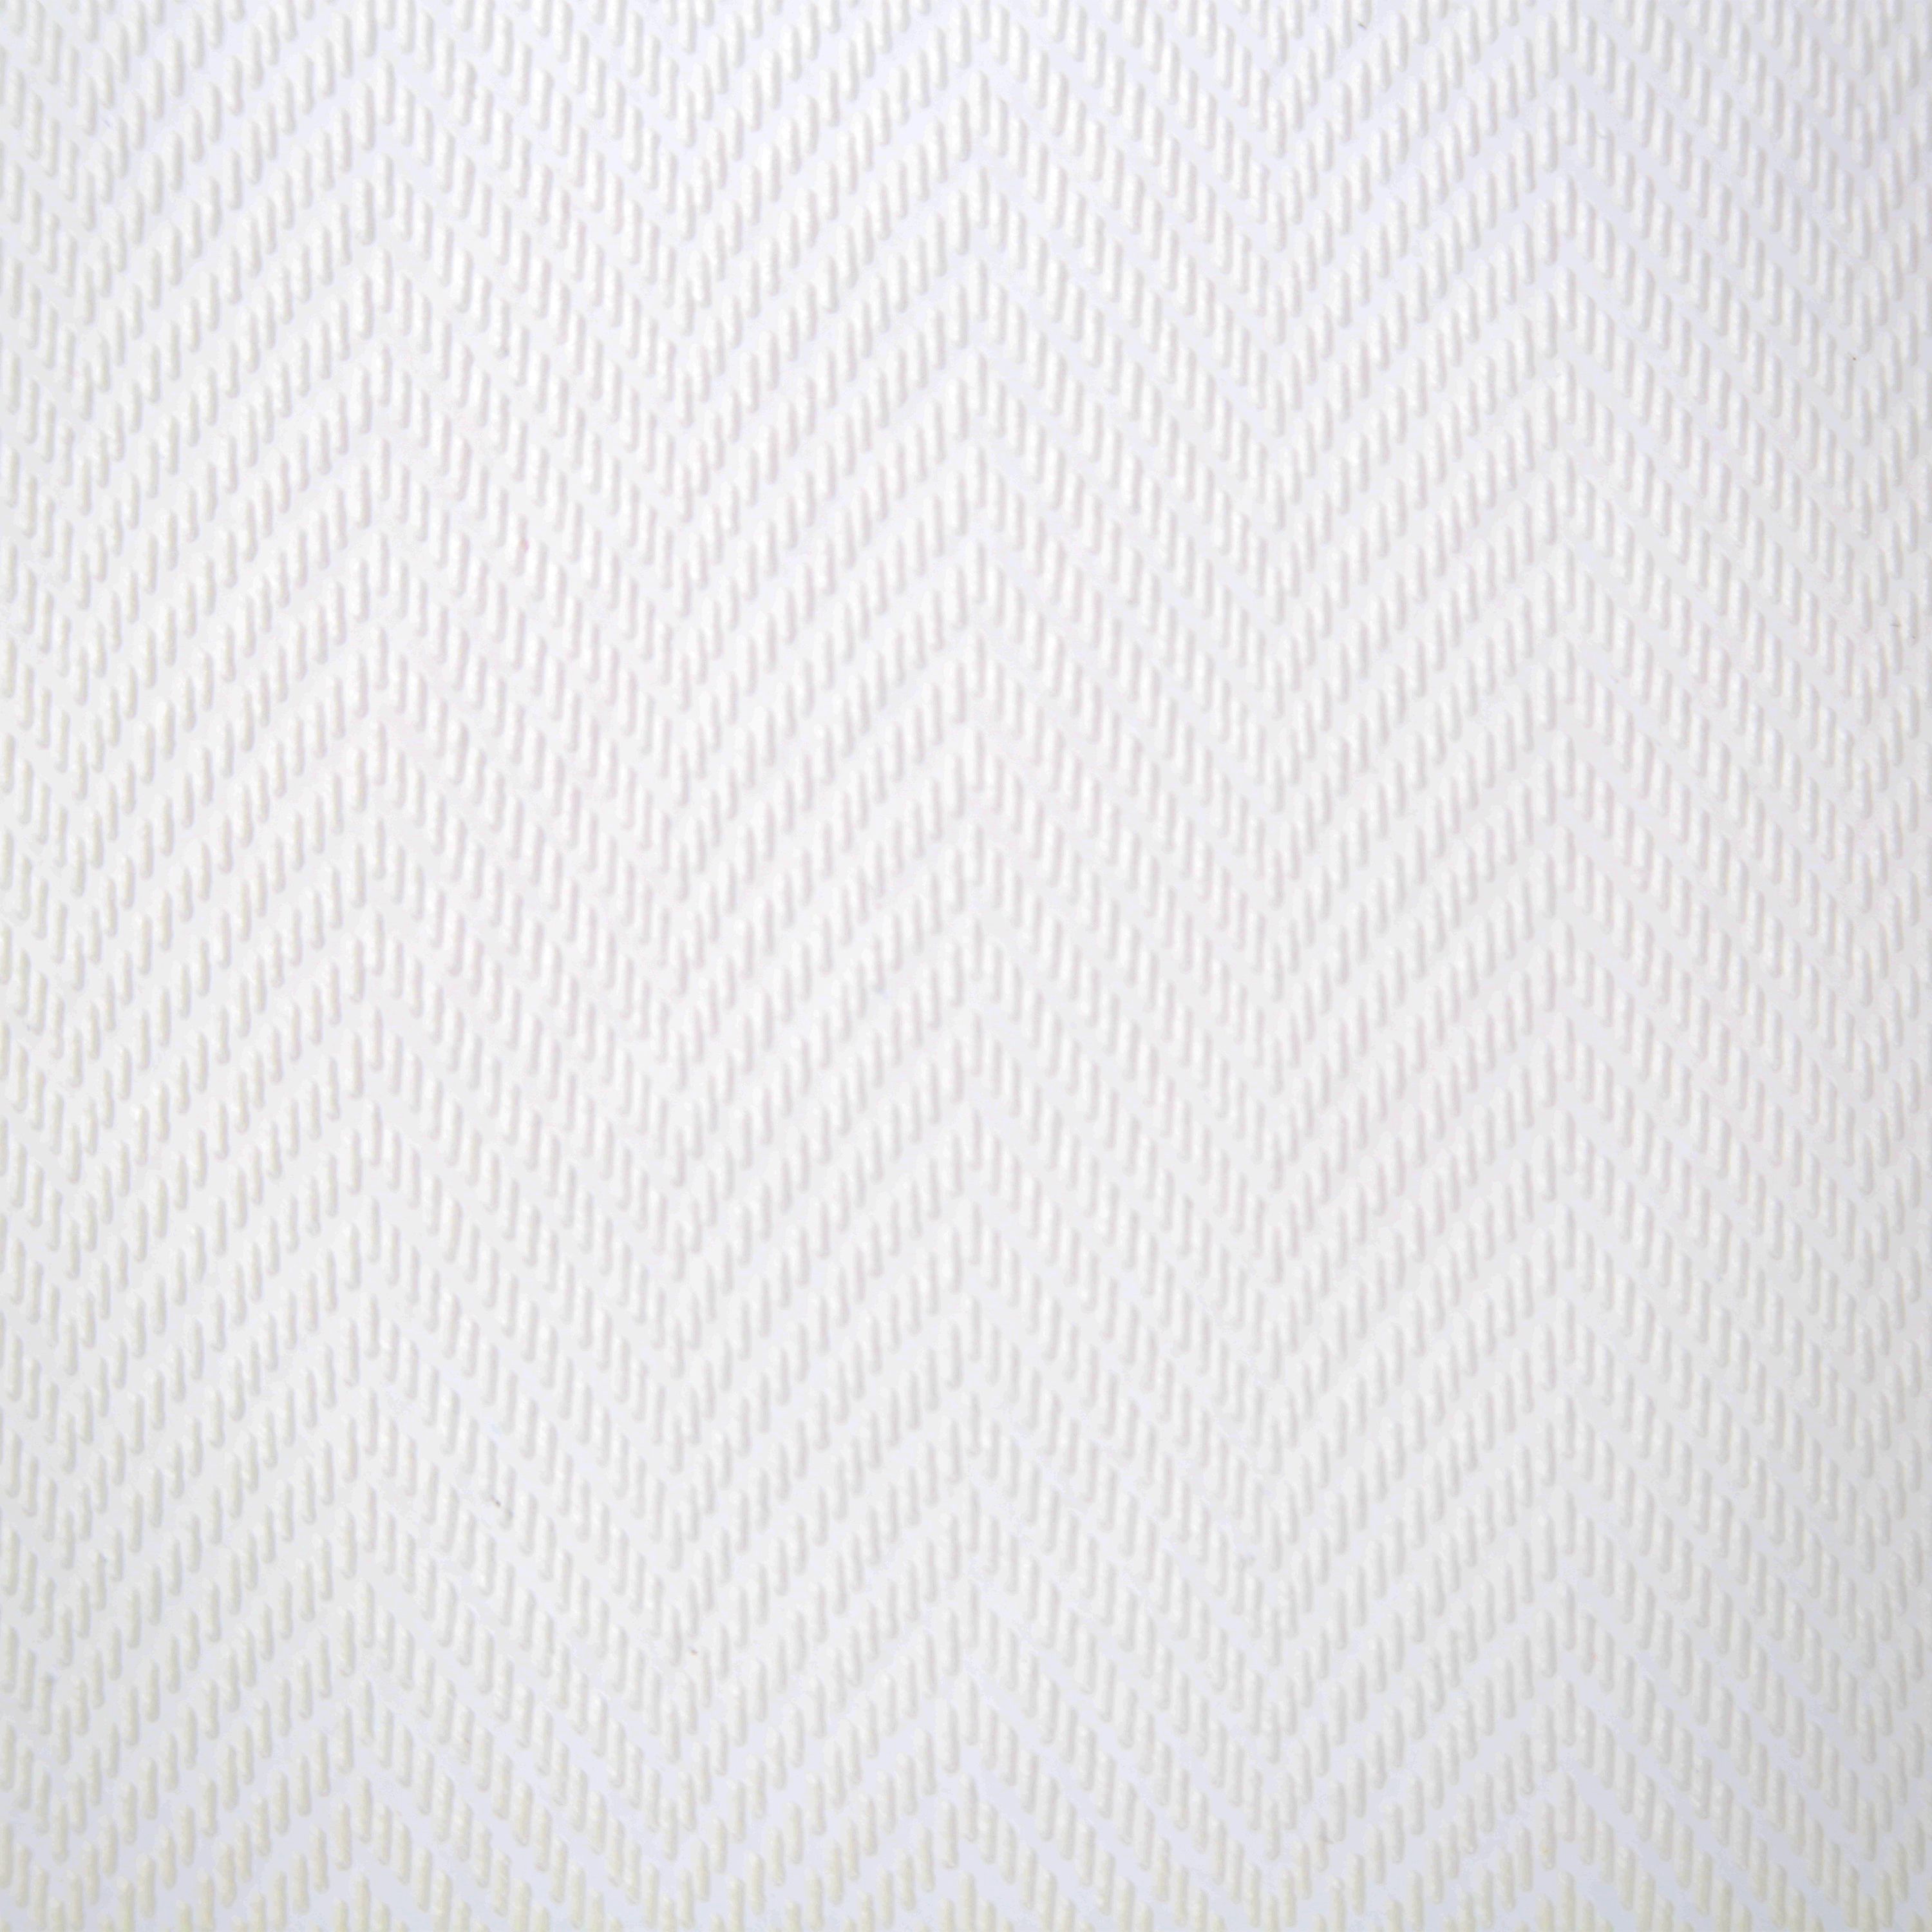 GoodHome Hura White Chevron Ridged effect Textured Wallpaper Sample